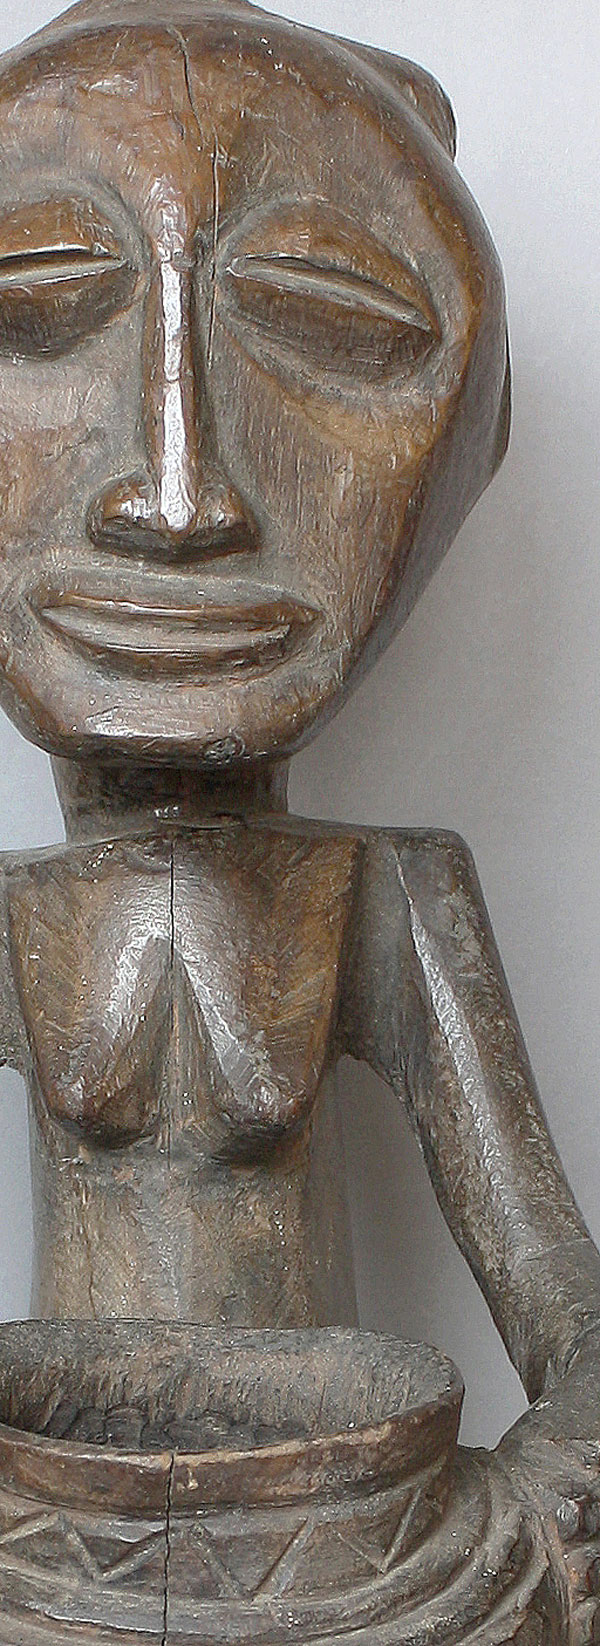 Mboko Schalentraegerin Kongo Bowl holding Figure A1